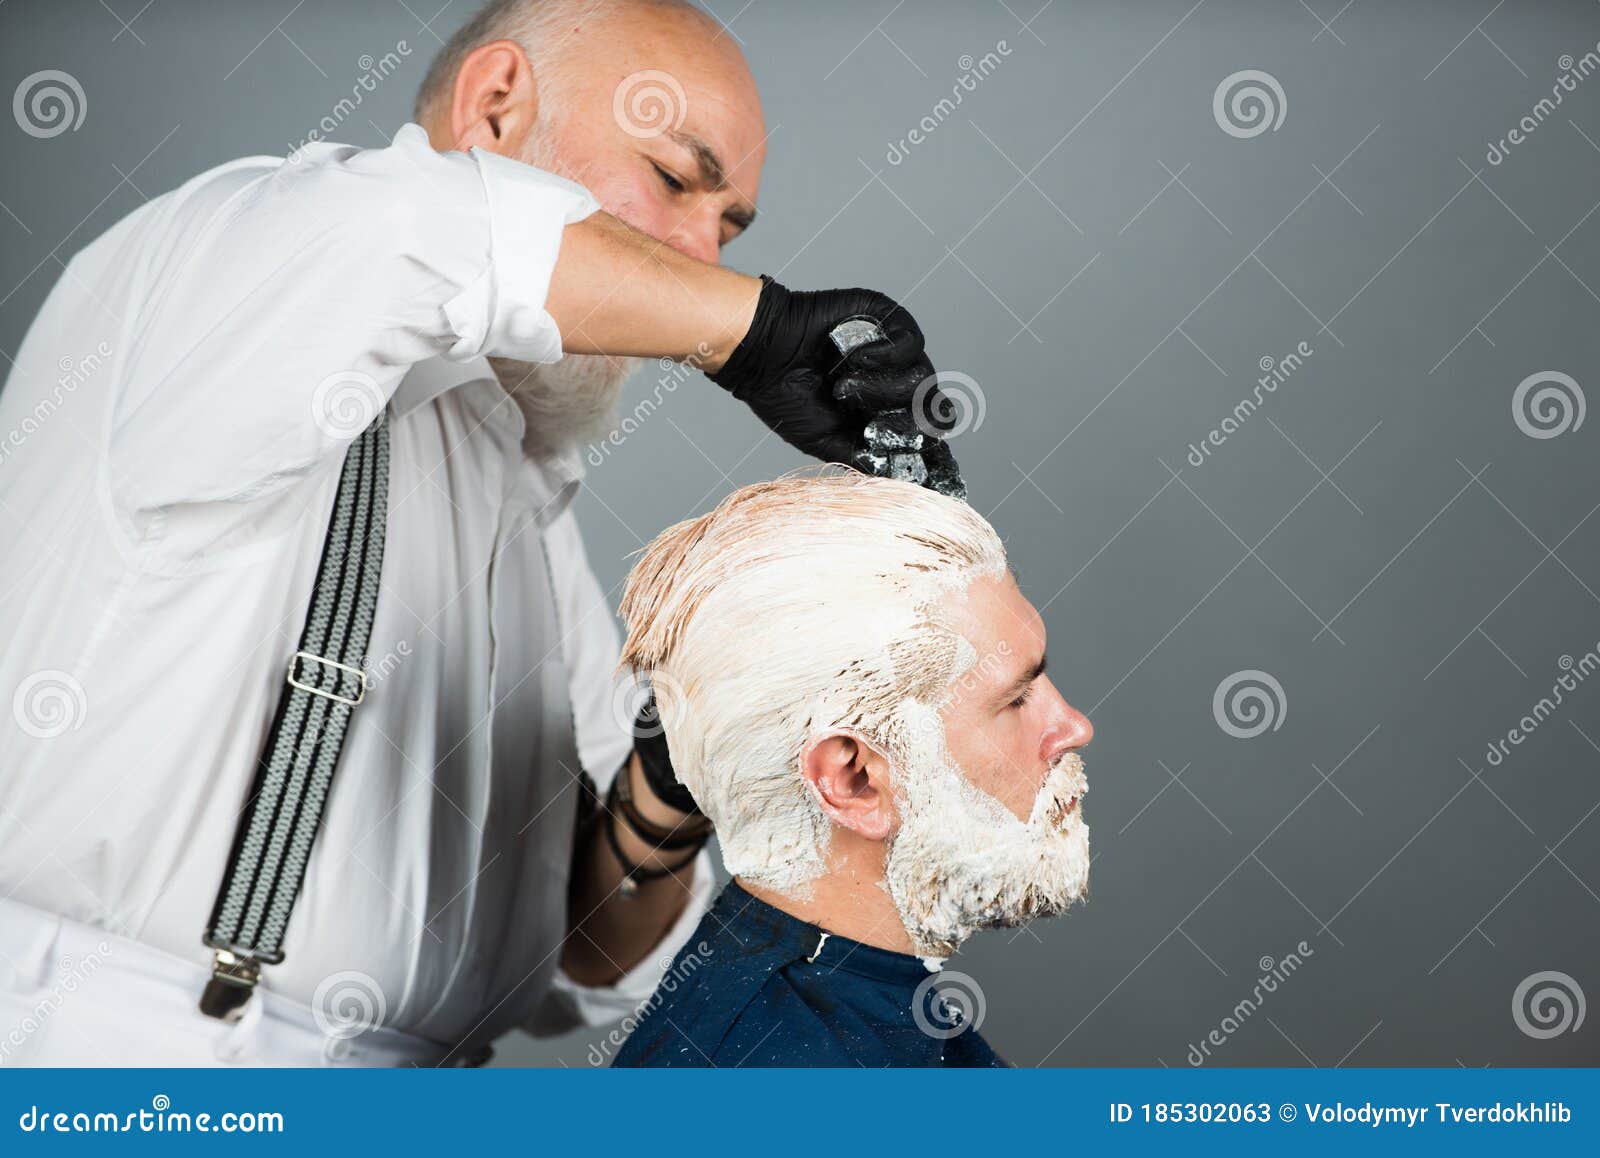 Hair Dye Customer Man. Hair Salon. Application of Cosmetics. Hair Coloring  in a Beauty Salon. Stock Image - Image of blonde, hairdo: 185302063